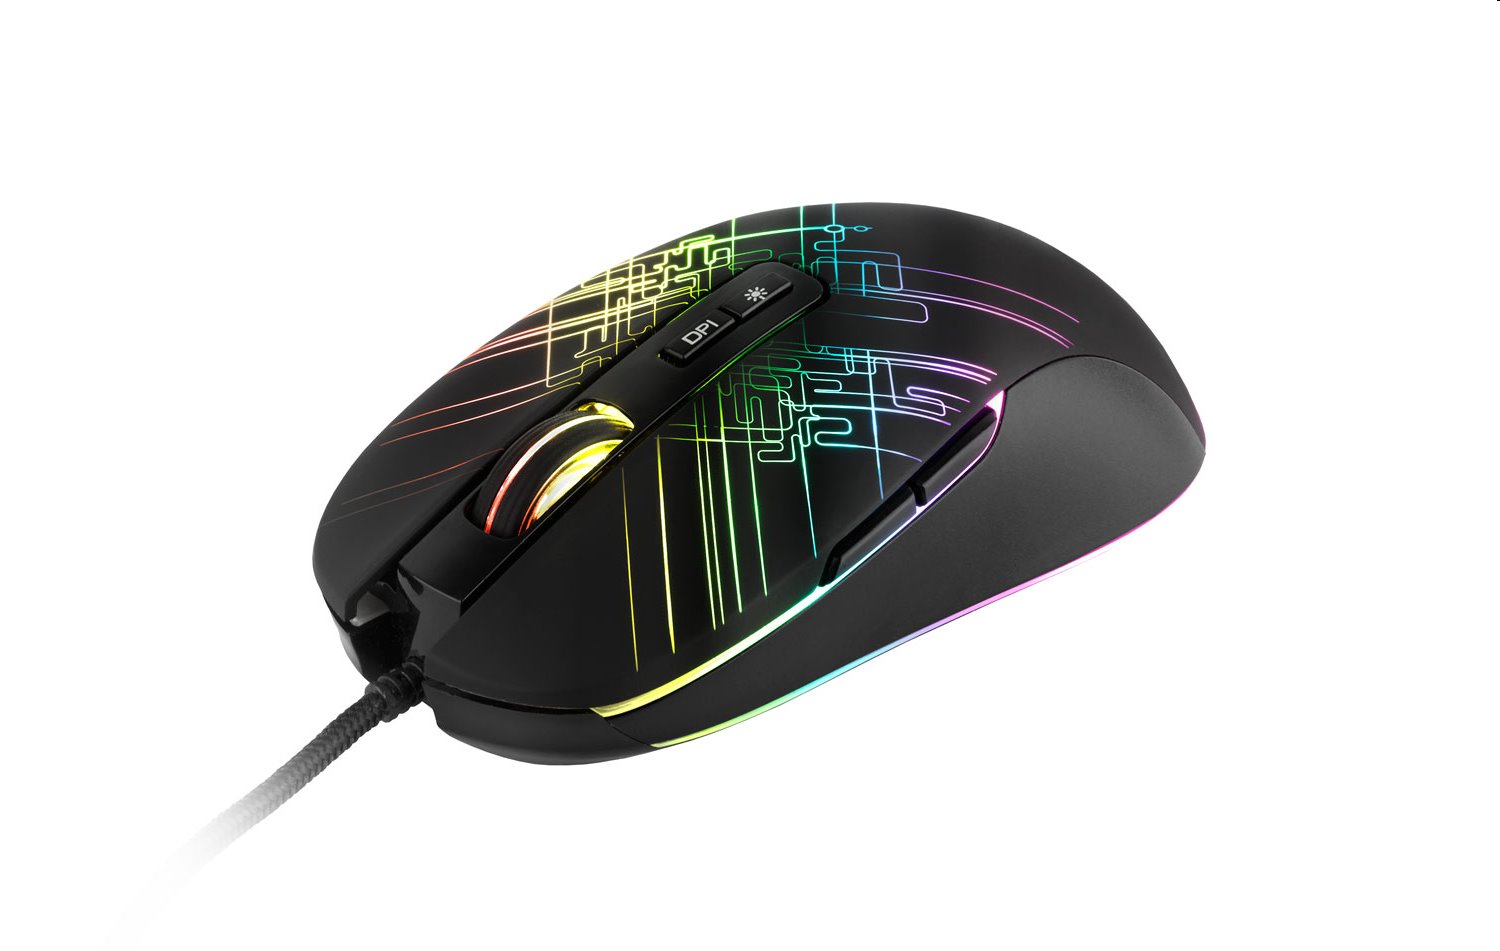 Herná myš C-TECH Dusk (GM-27L), casual gaming, 3200 DPI, RGB podsvietenie, USB